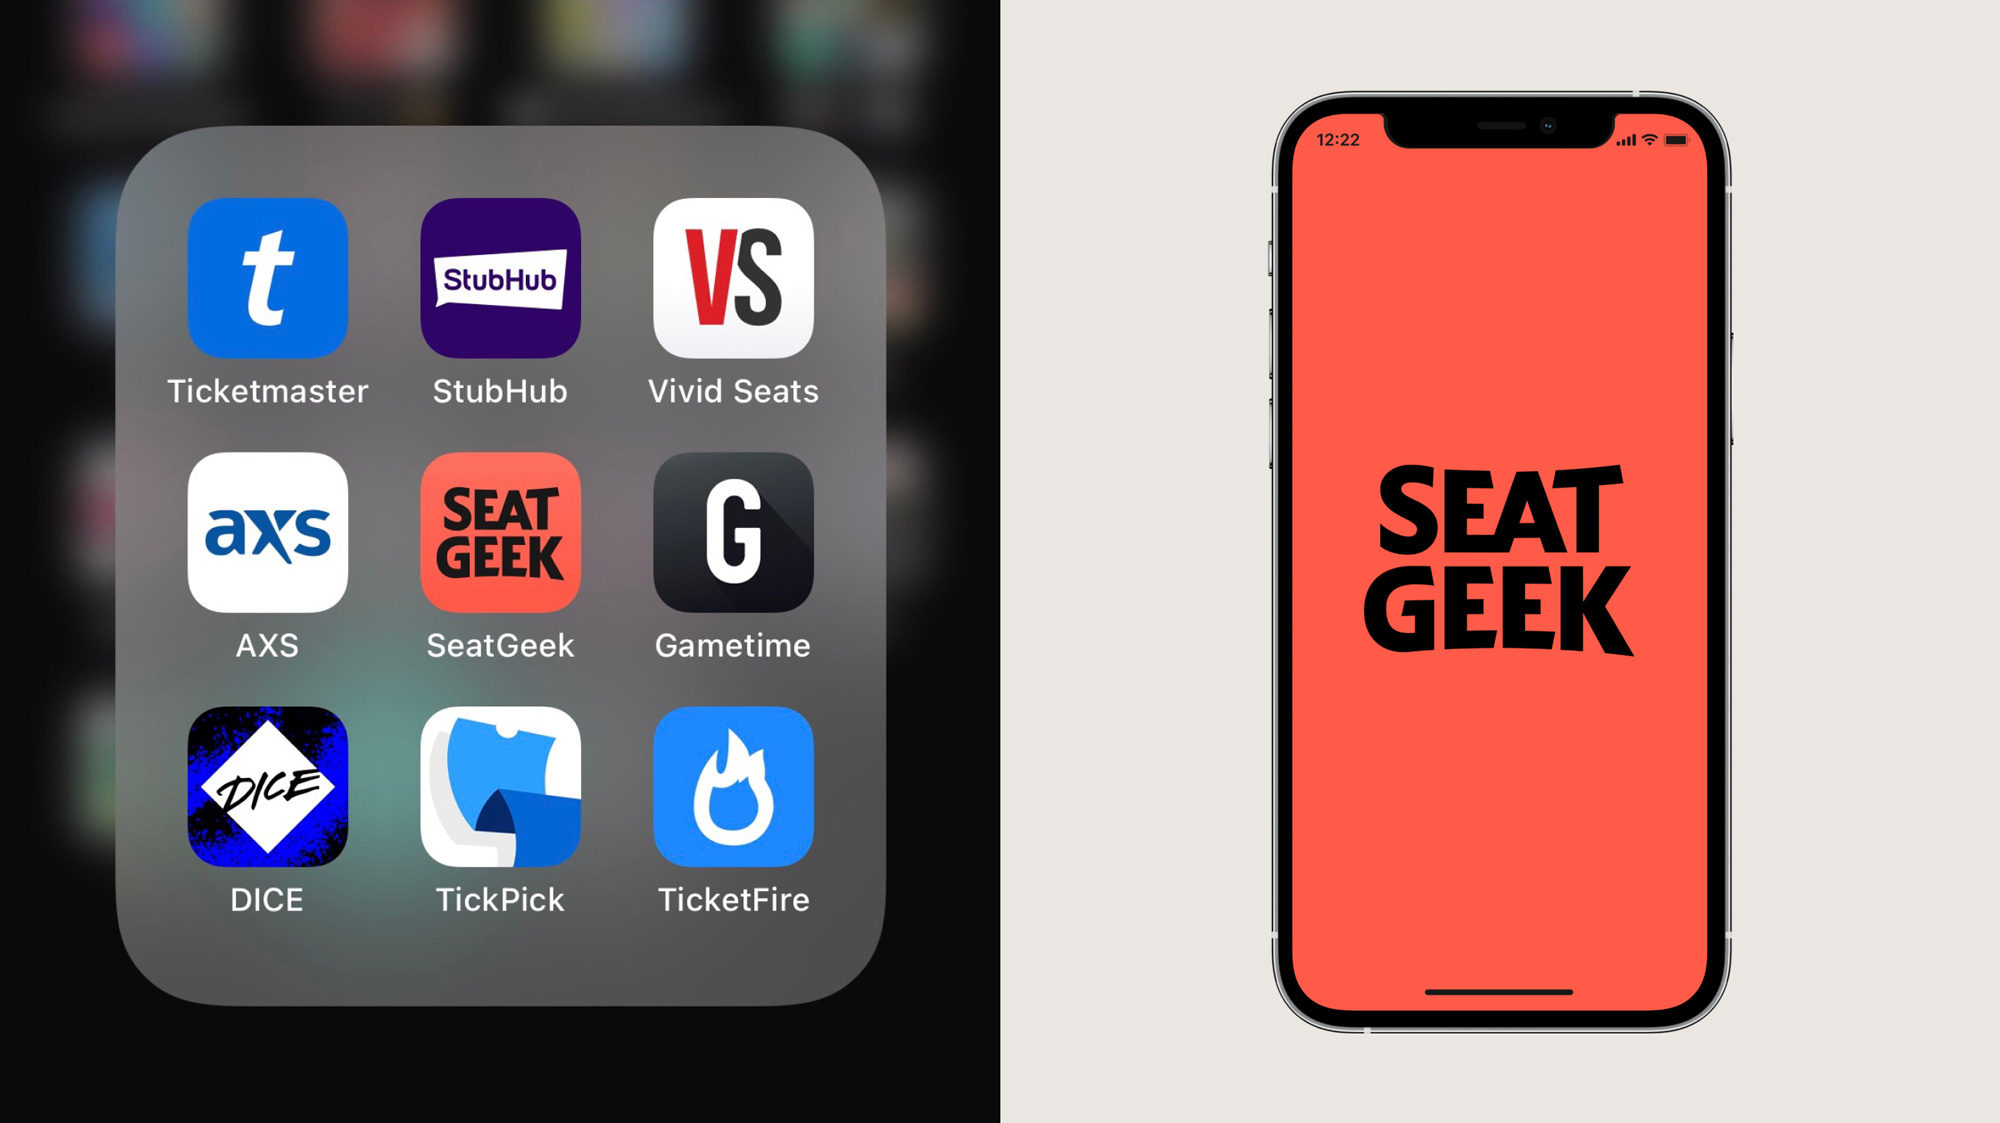 SeatGeek rebrand 2021 - app icon and splash screen